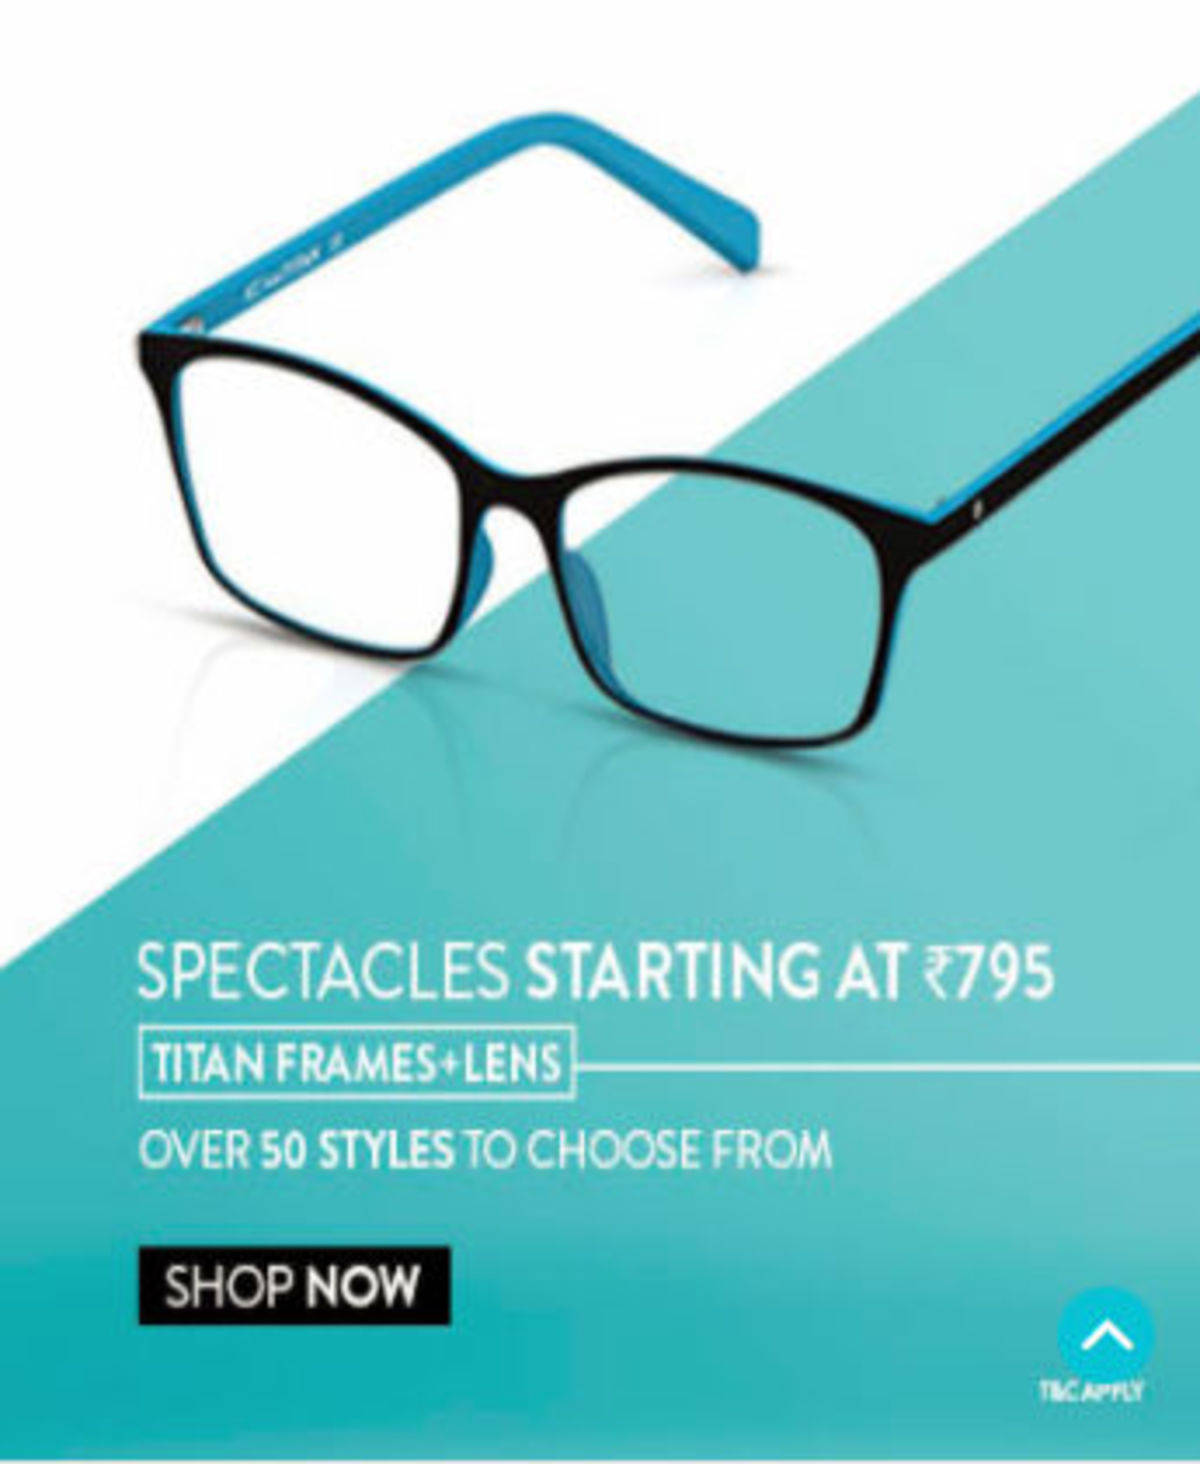 Titan Eye Plus in Perambur,Chennai - Best Optical Lens Dealers in Chennai -  Justdial